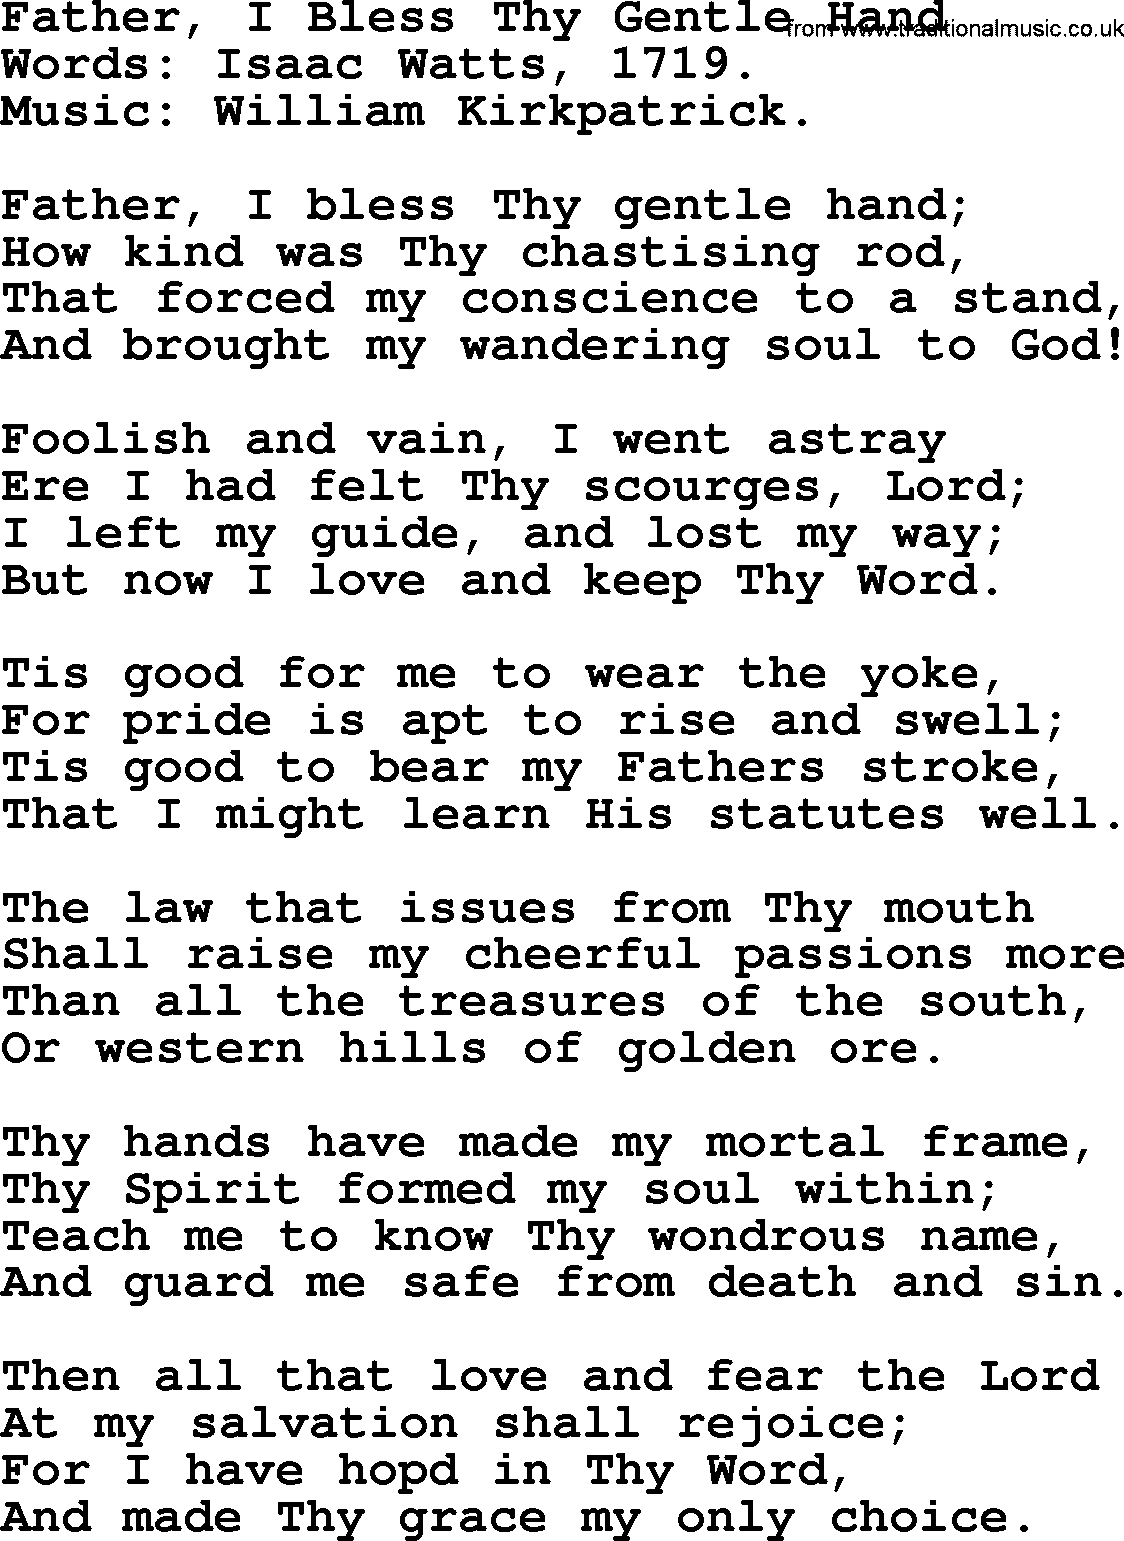 Isaac Watts Christian hymn: Father, I Bless Thy Gentle Hand- lyricss